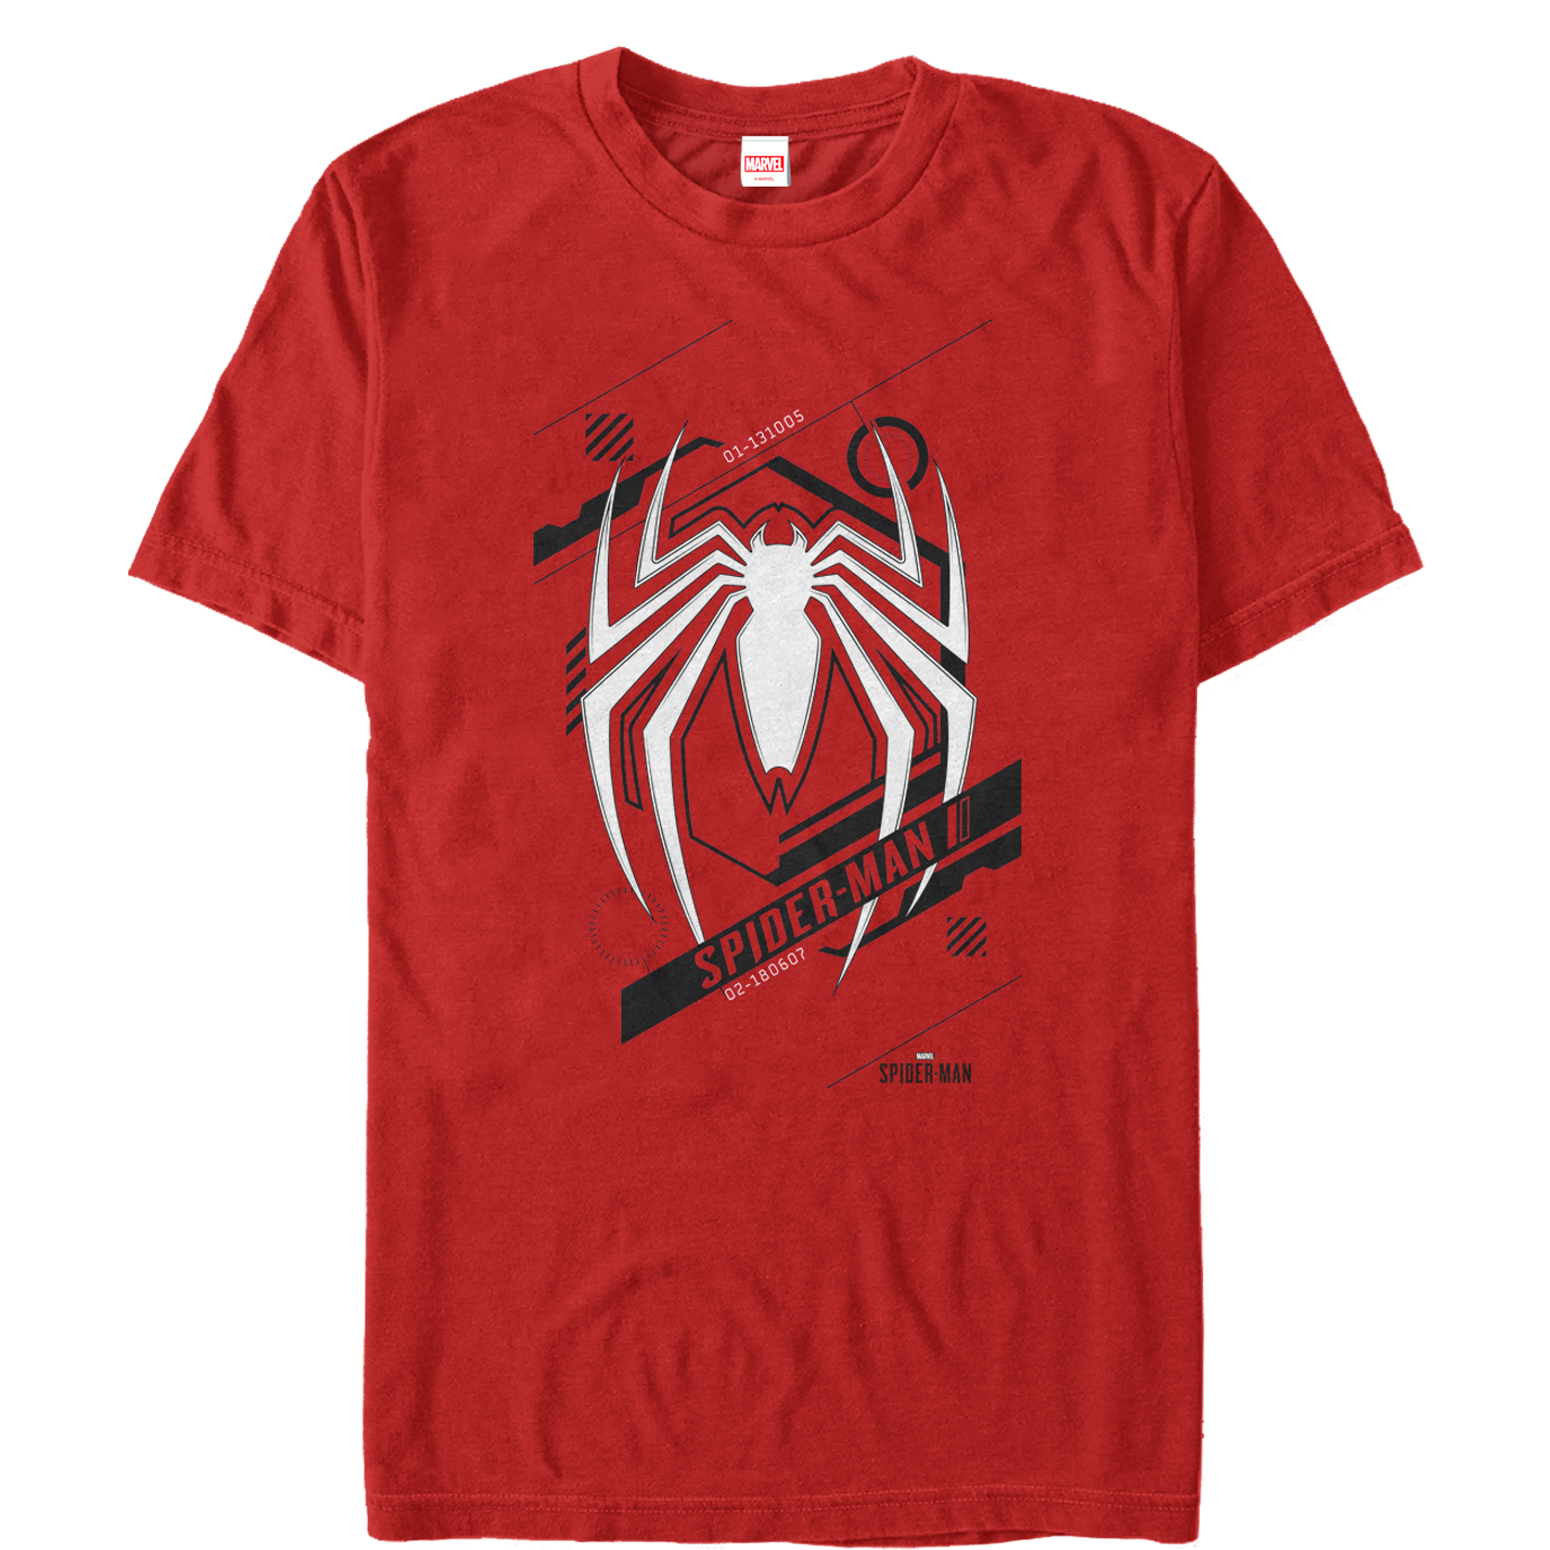 Men's Marvel Gamerverse Spider-Man Symbol  Graphic Tee Red Large - image 1 of 4